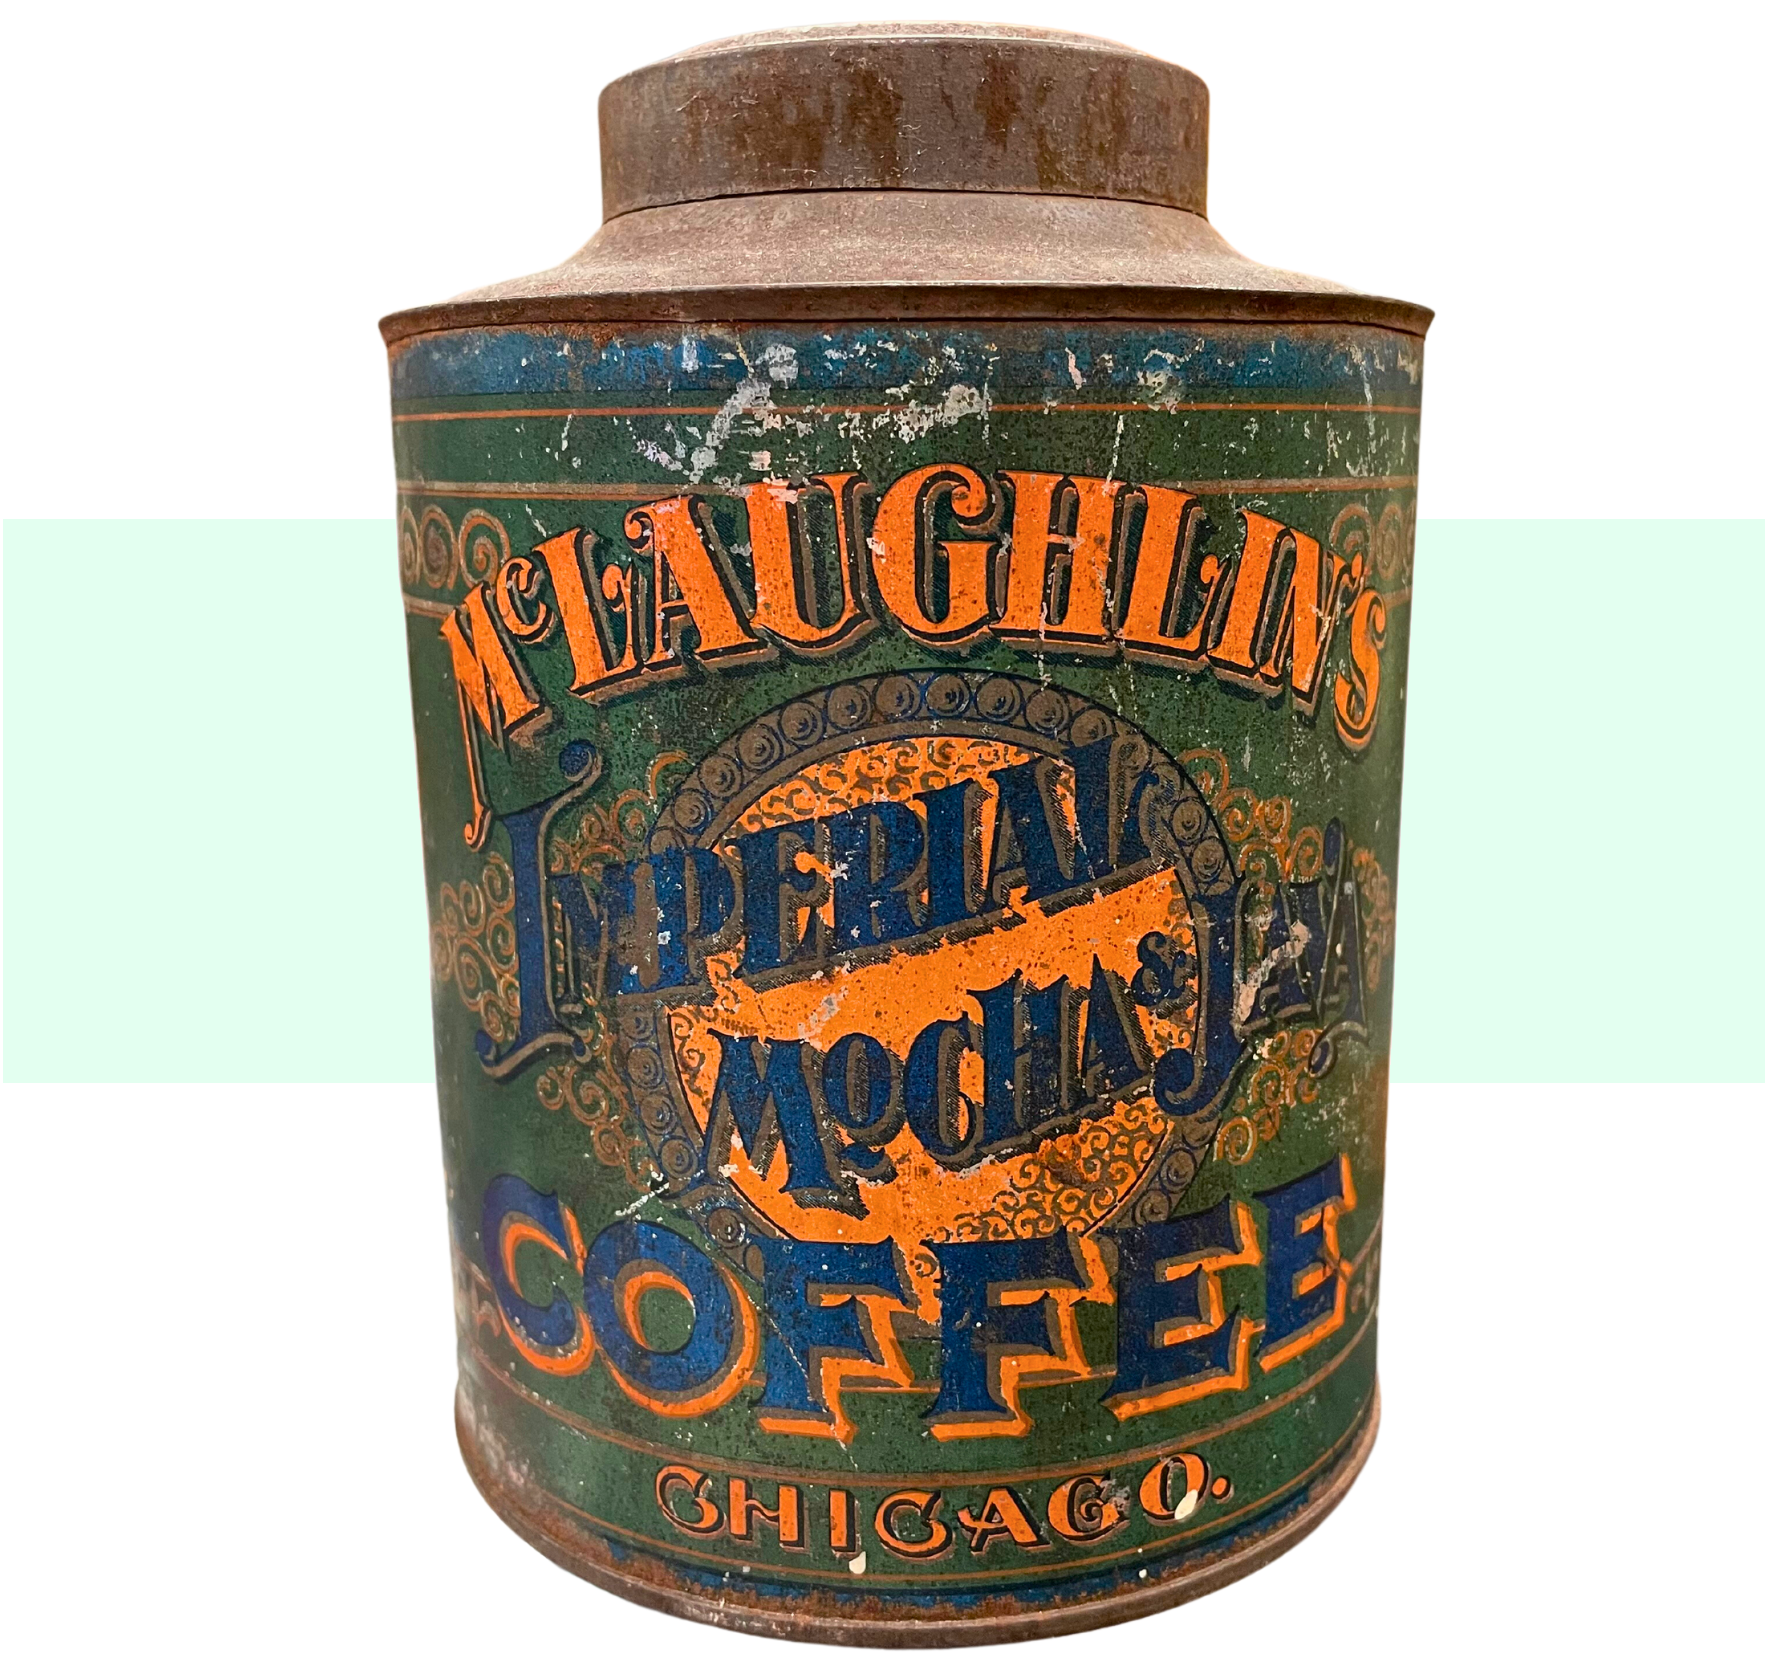 mclaughlin's coffee history